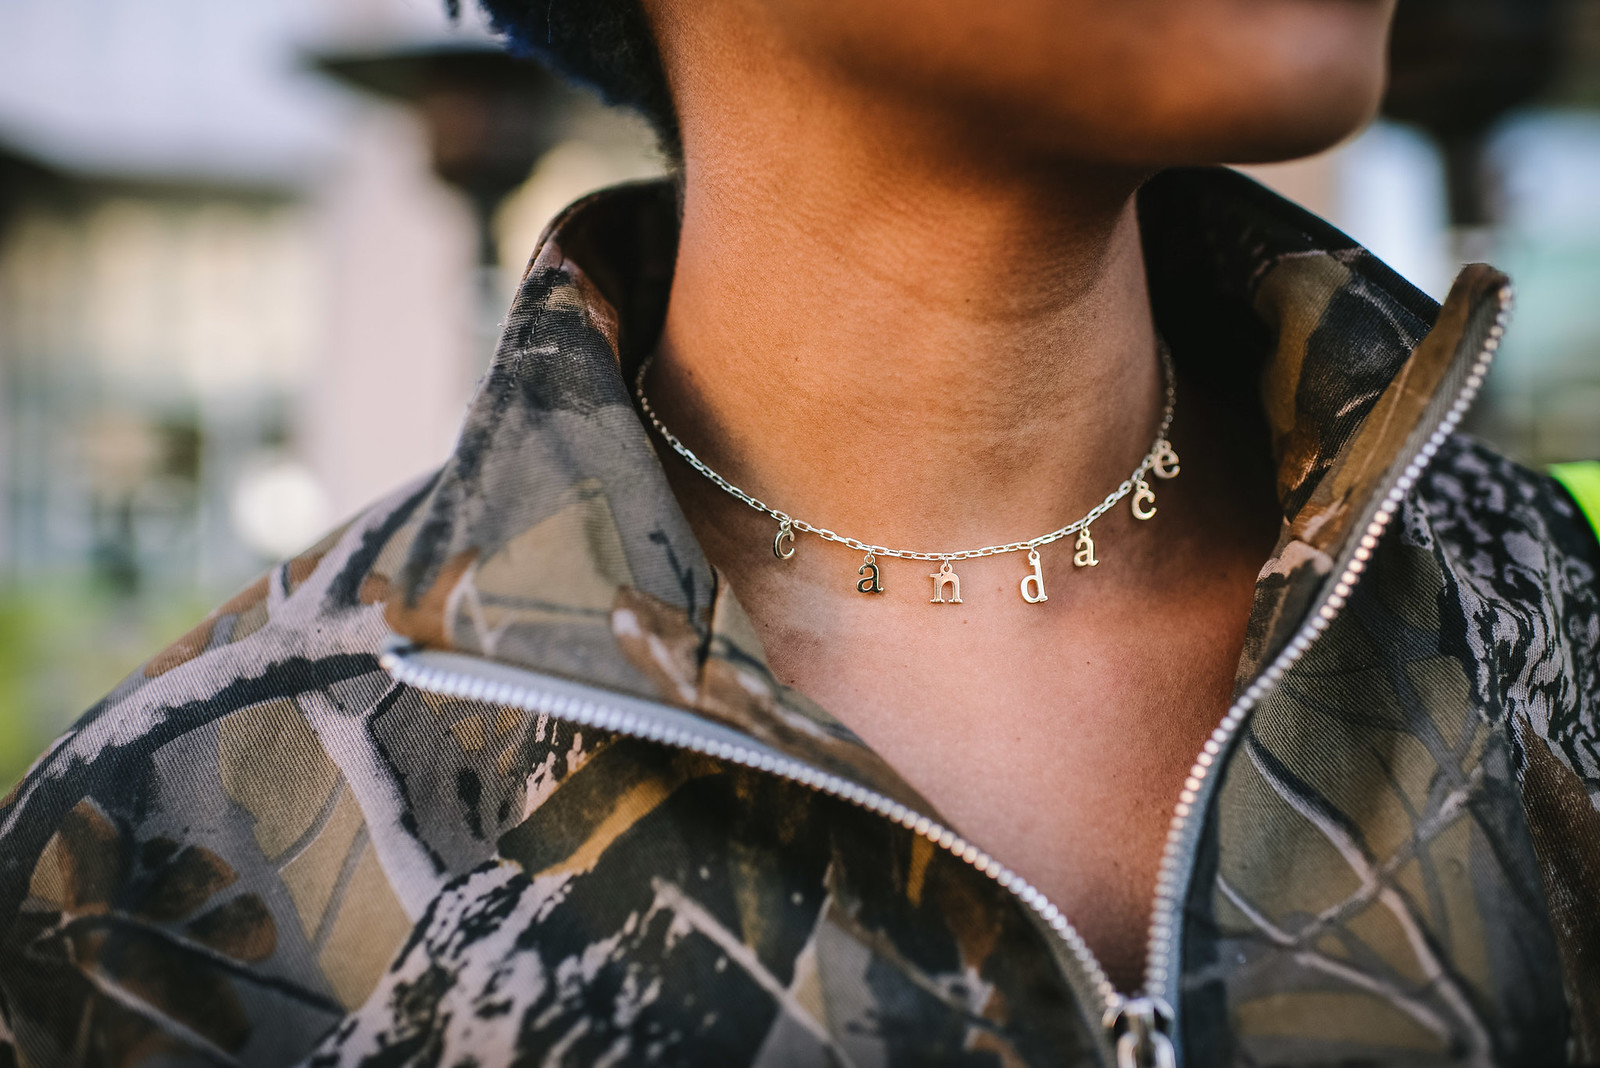 Adina's jewels necklace